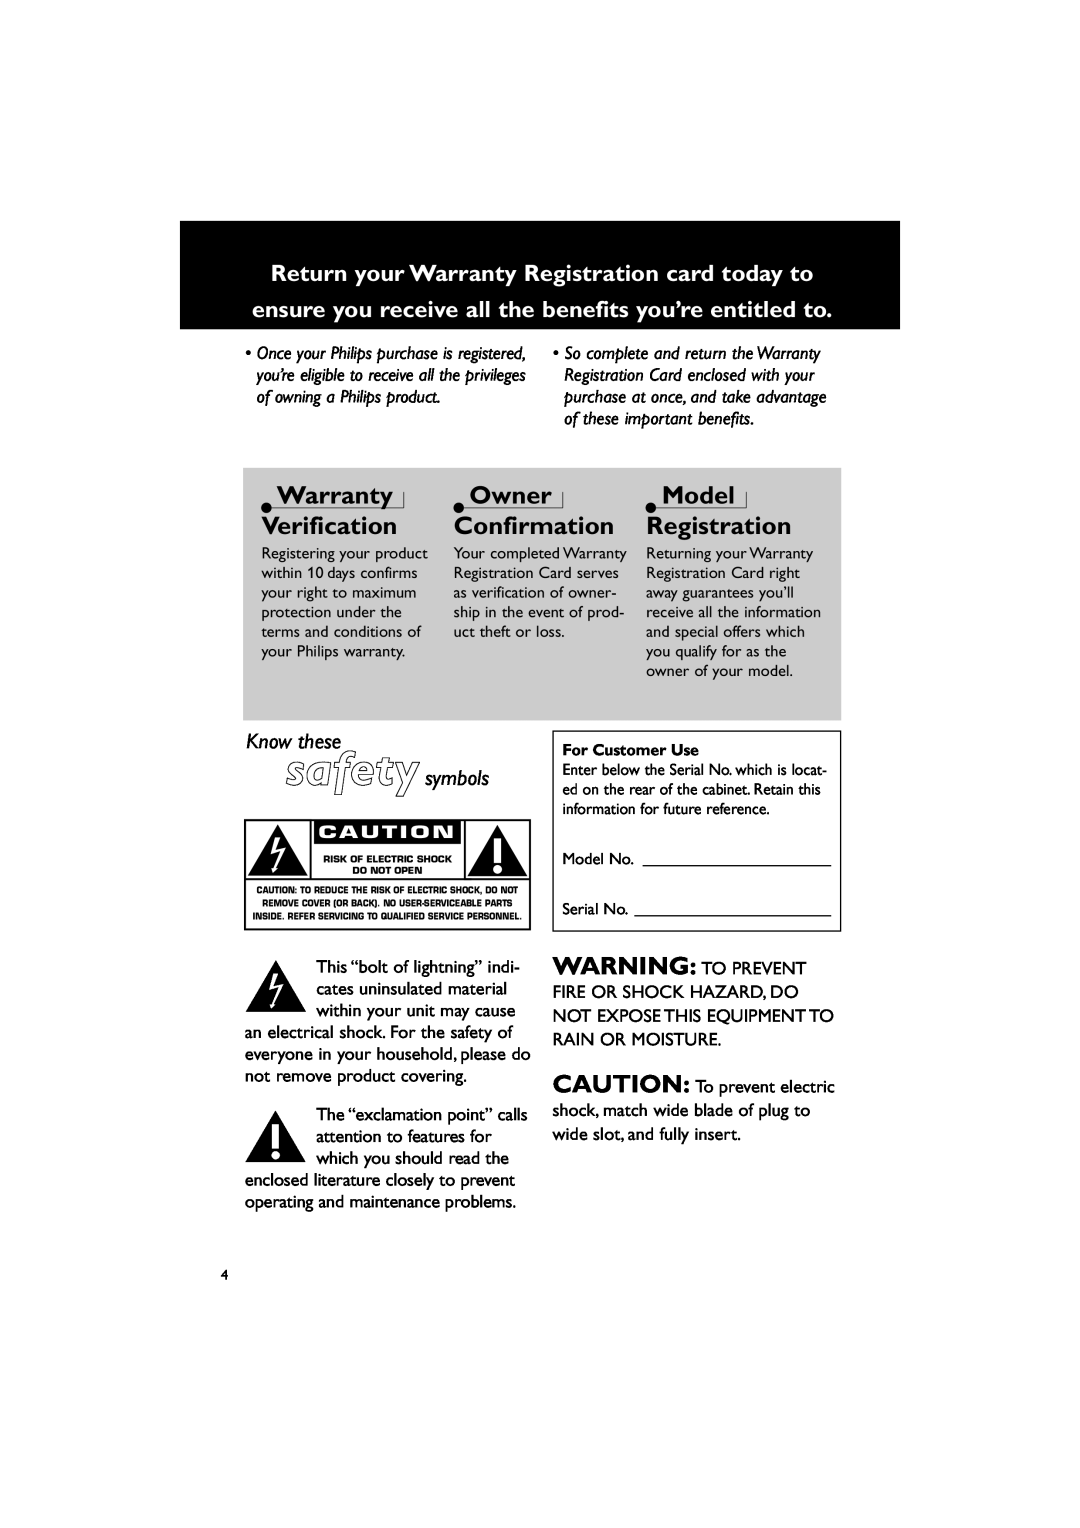 Philips FWM569/37B warranty Owner Confirmation, Model Registration, Warranty Verification, Know these safety symbols 